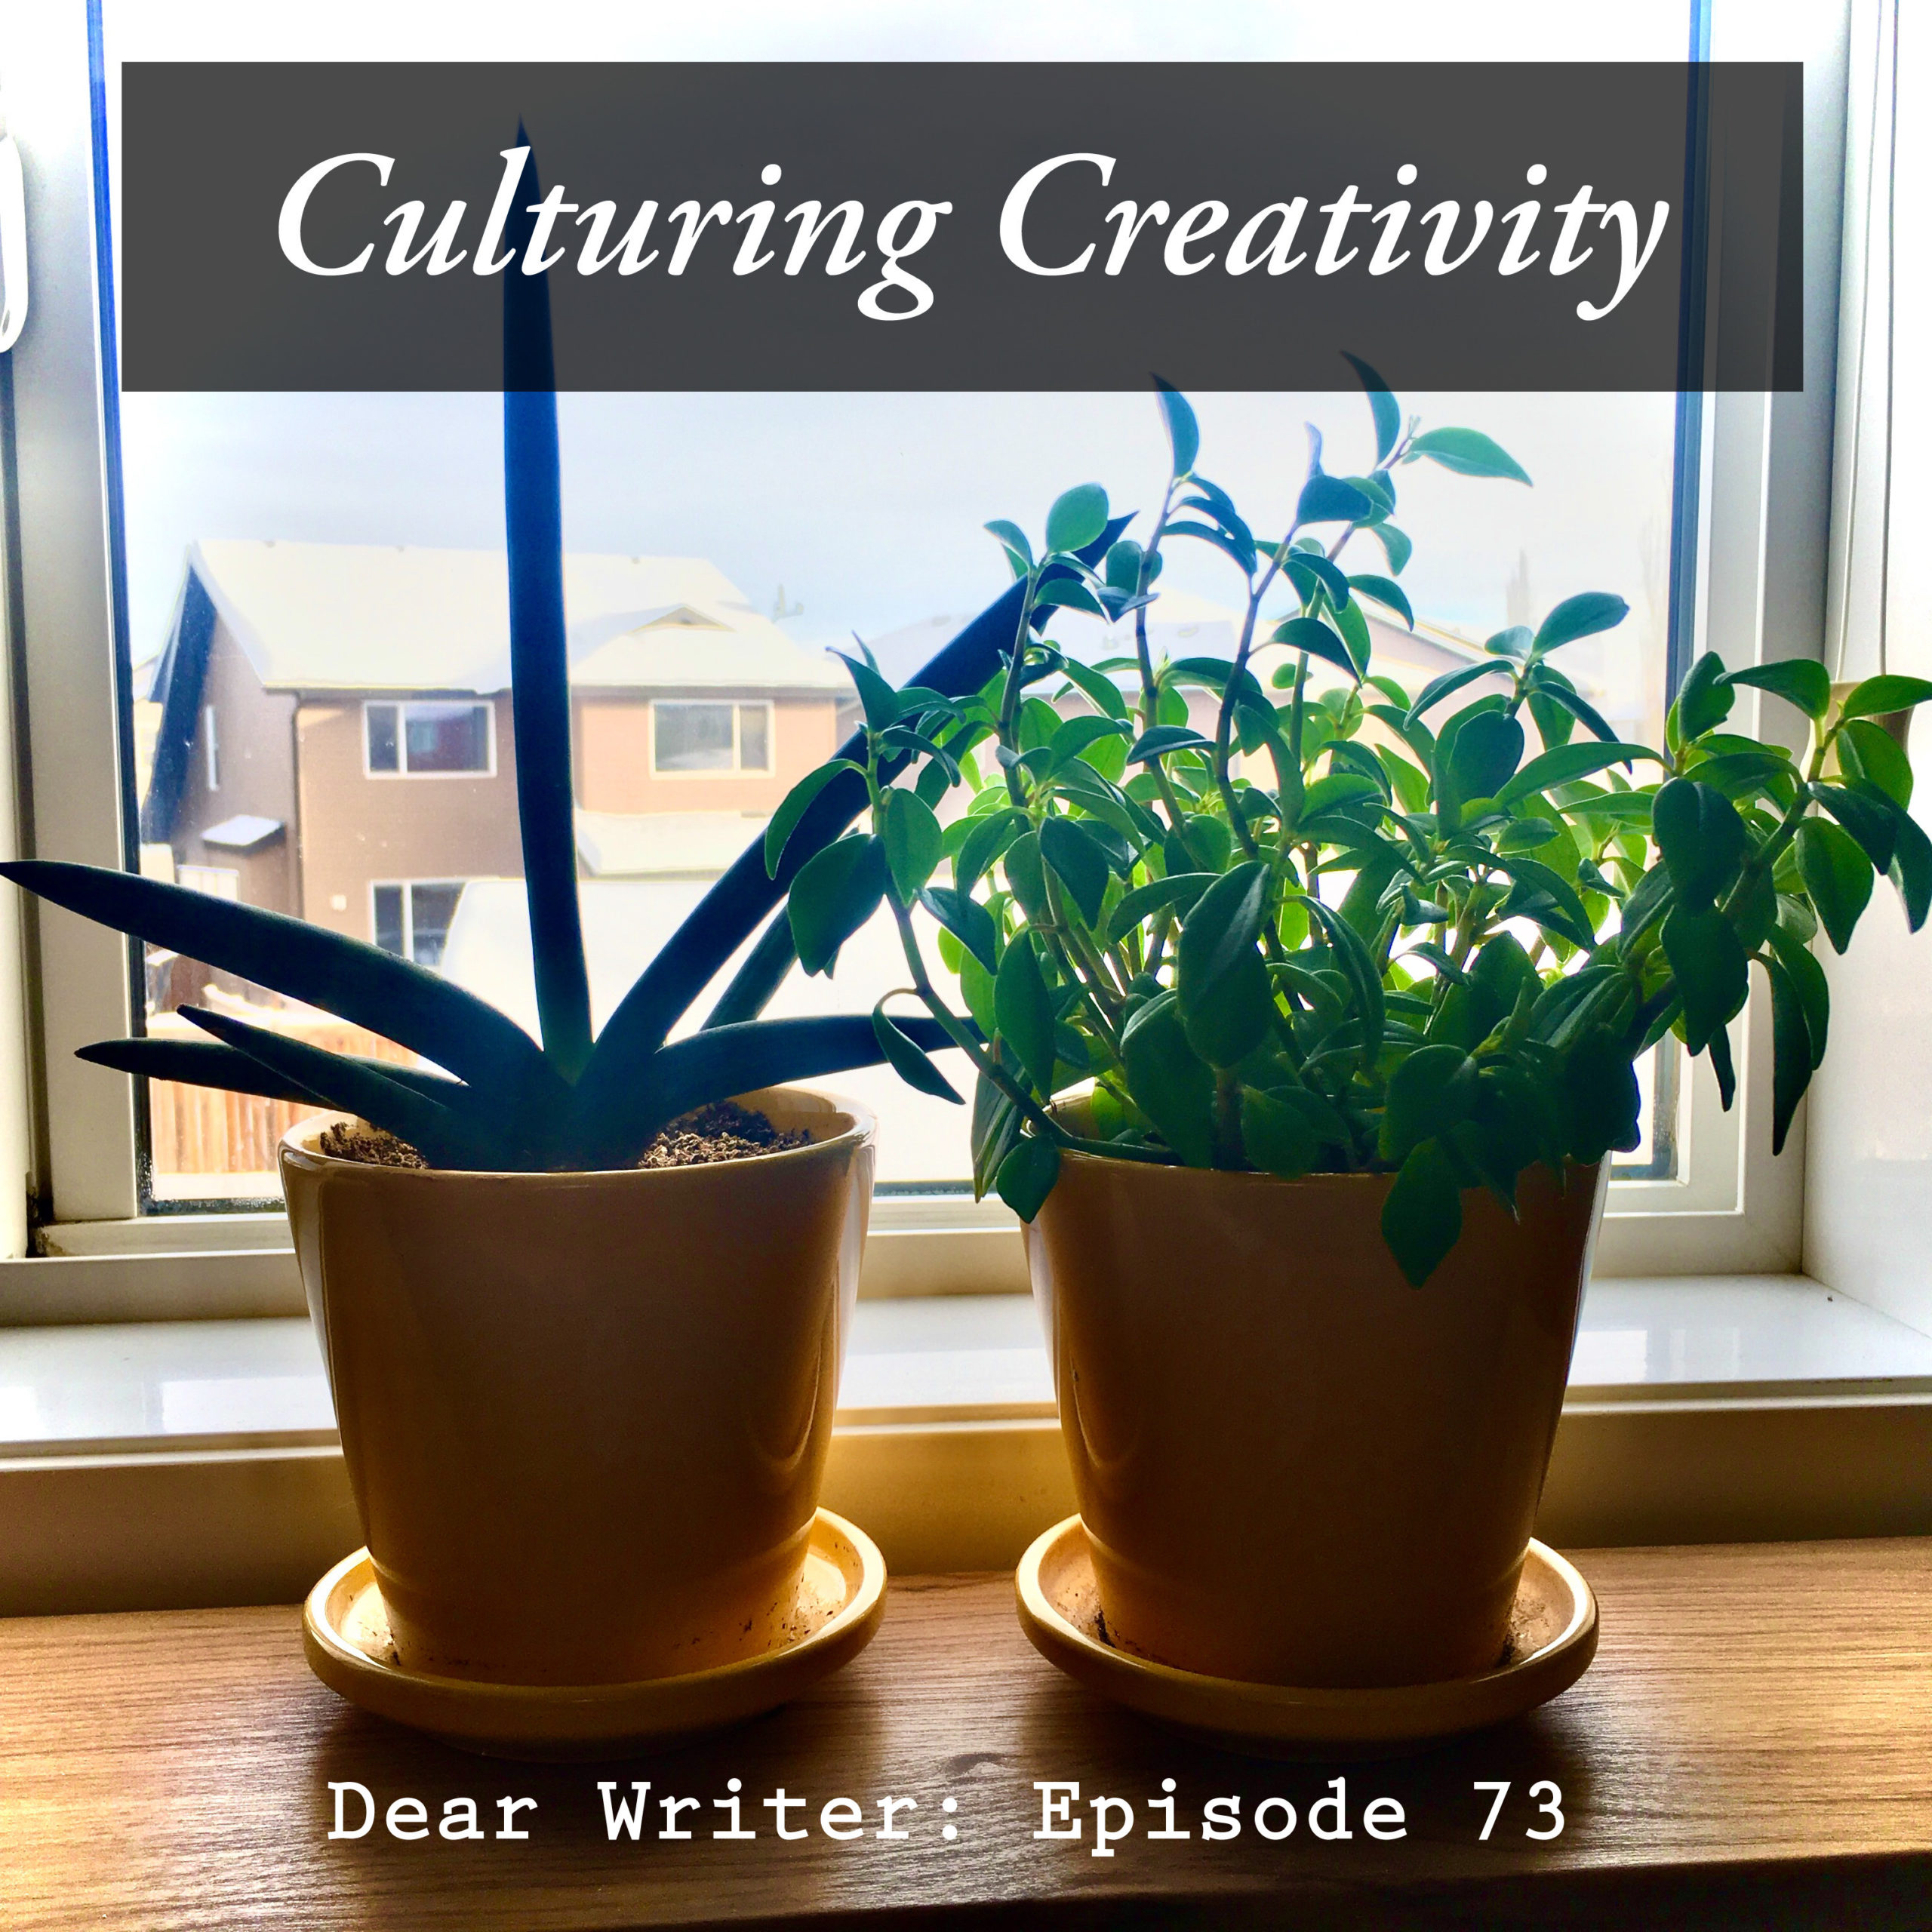 Dear Writer Episode 73 Finding Your Genre